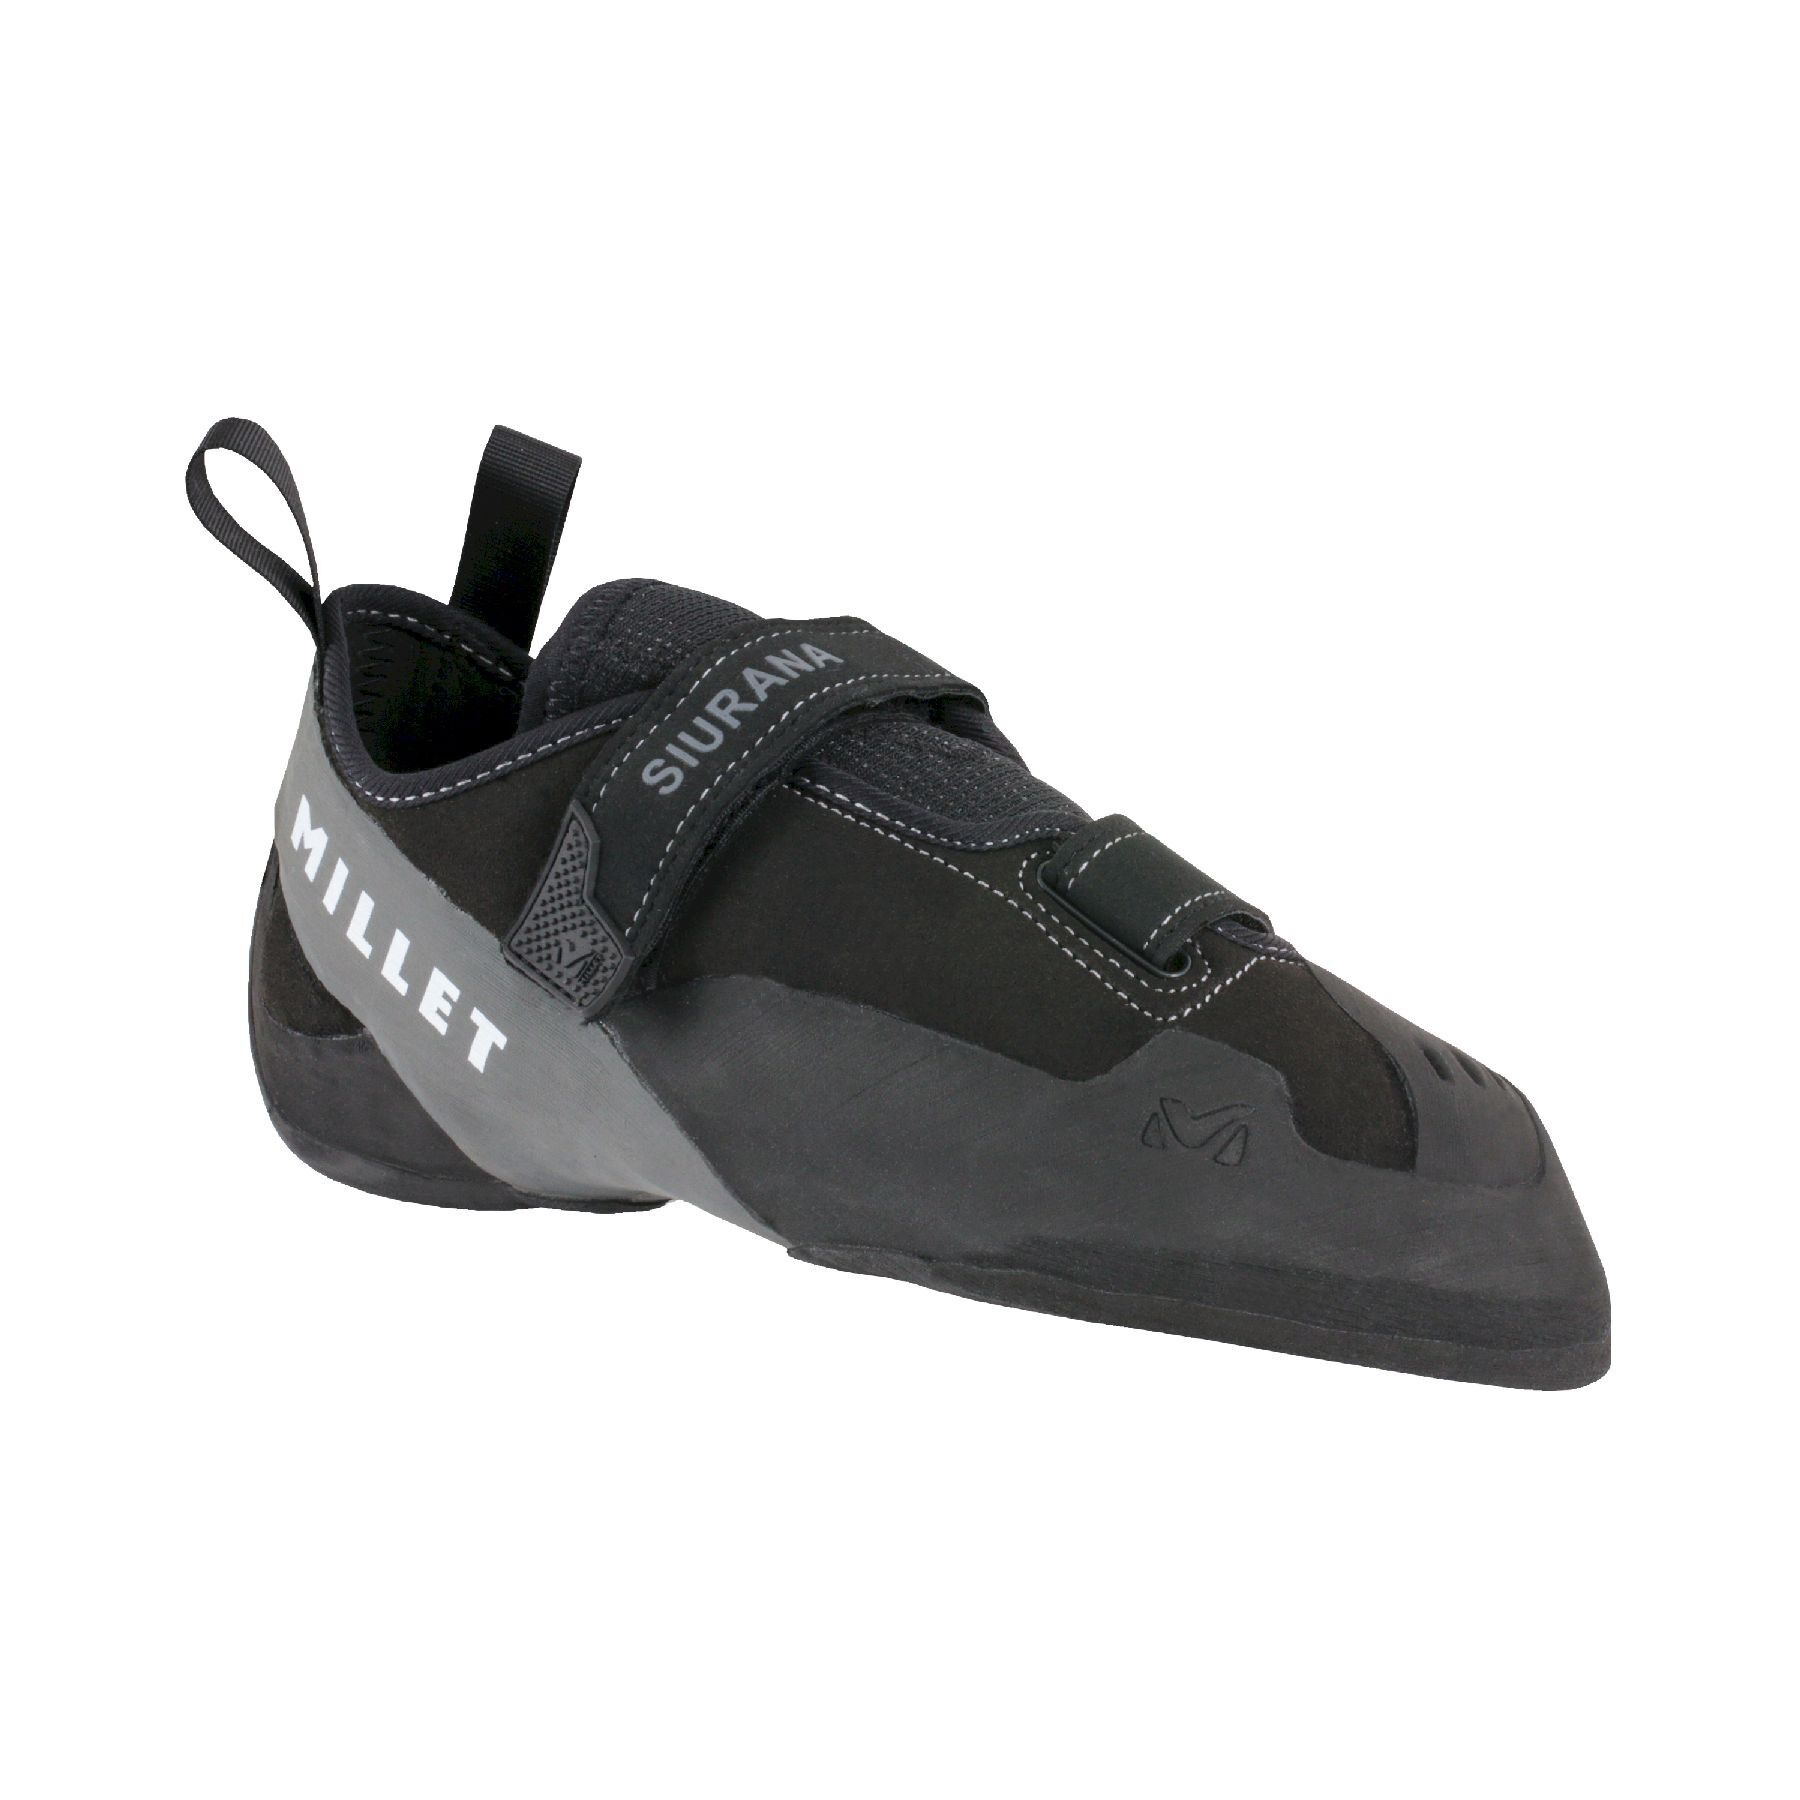 Millet Siurana Evo - Climbing shoes - Men's